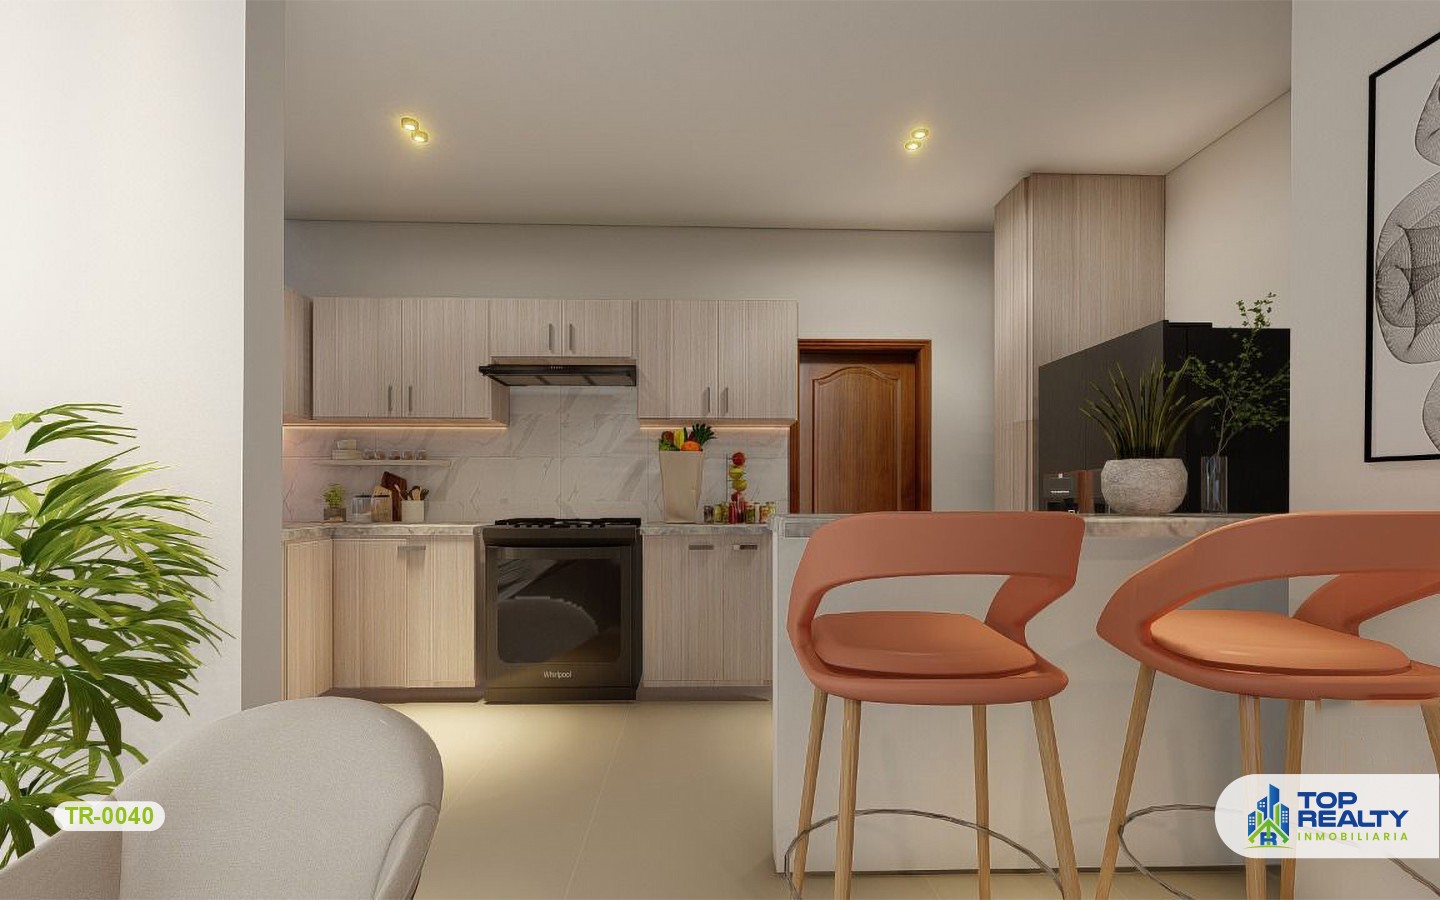 apartamentos - TR-0040: ¡Proyecto único! Casas en tres niveles con distribución excelente. 4